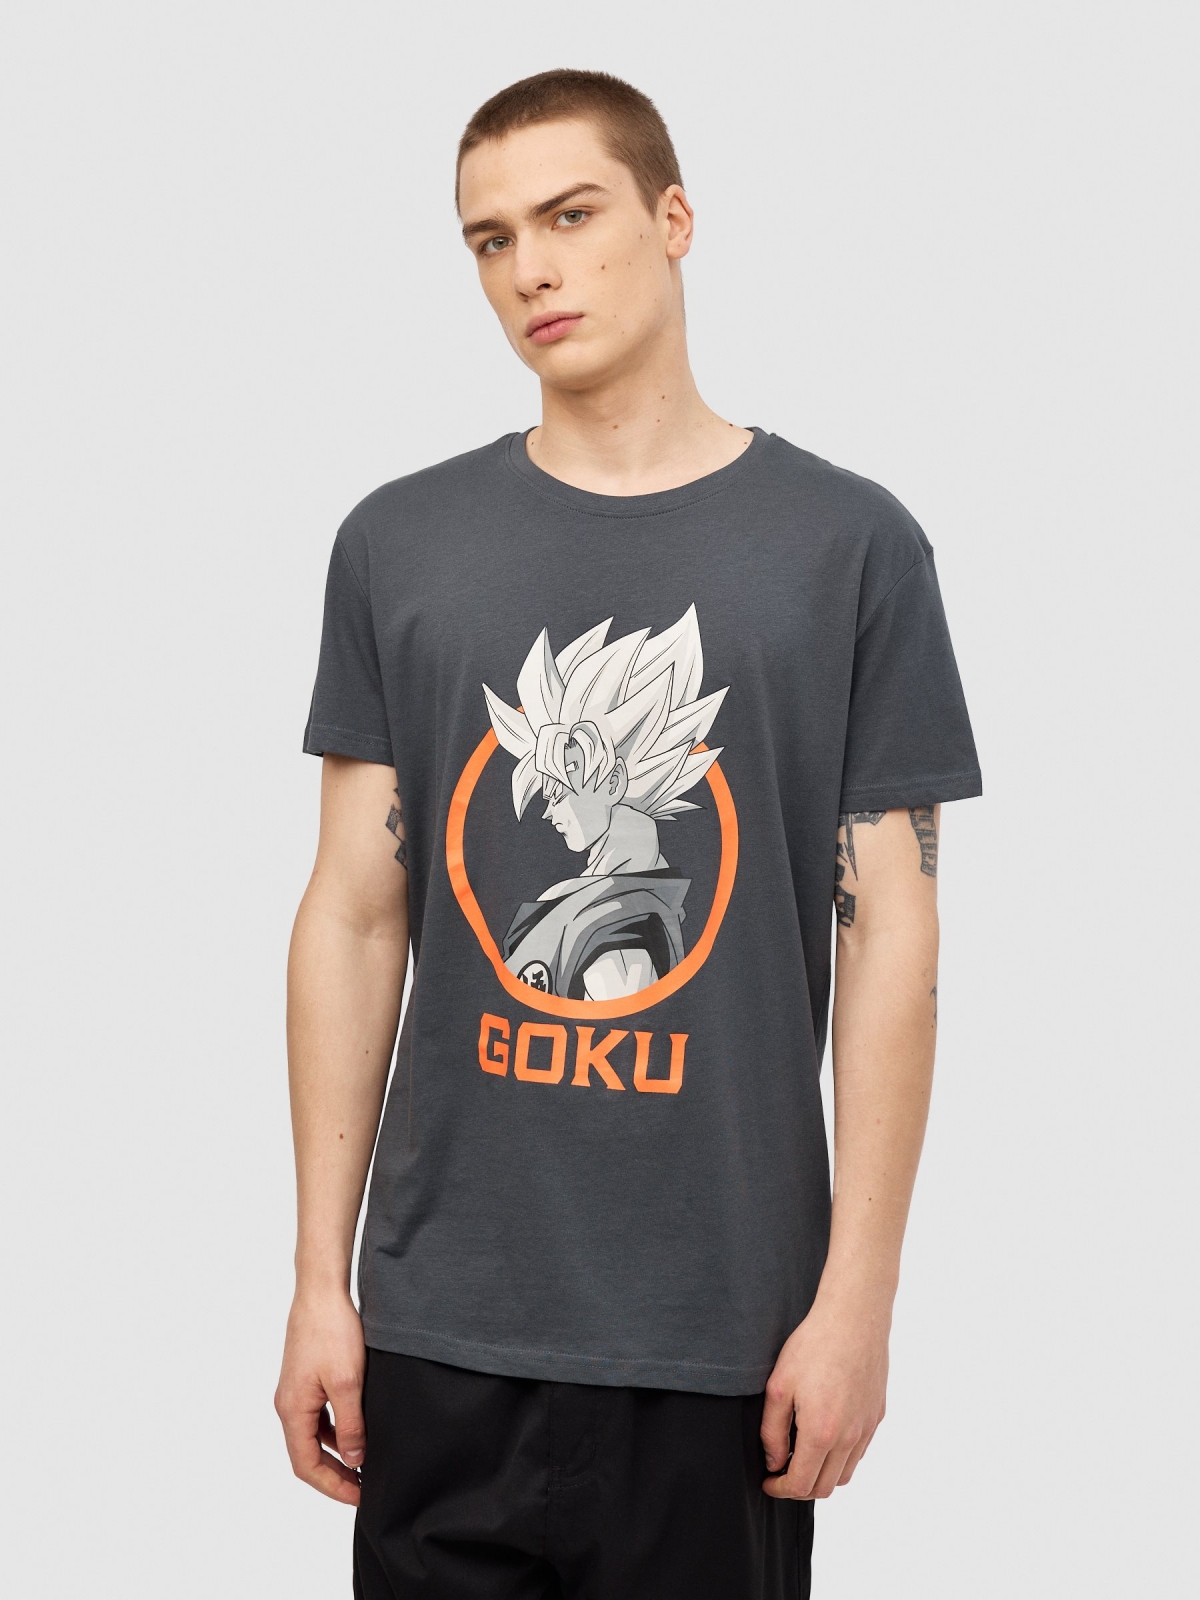 Goku T-shirt dark grey middle front view